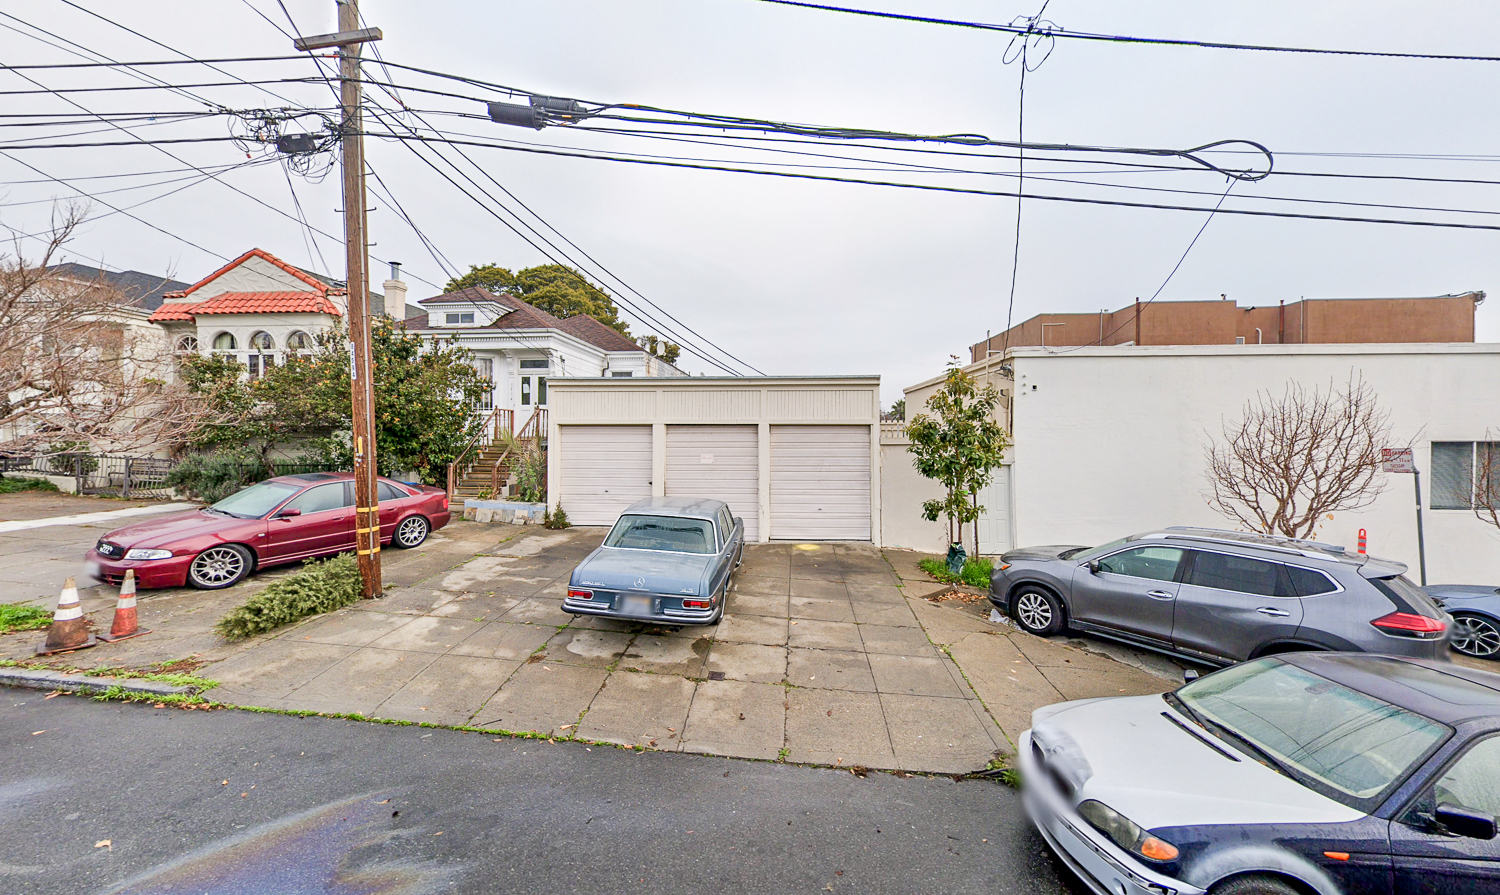 1704 Revere Avenue garage, image via Google Street View